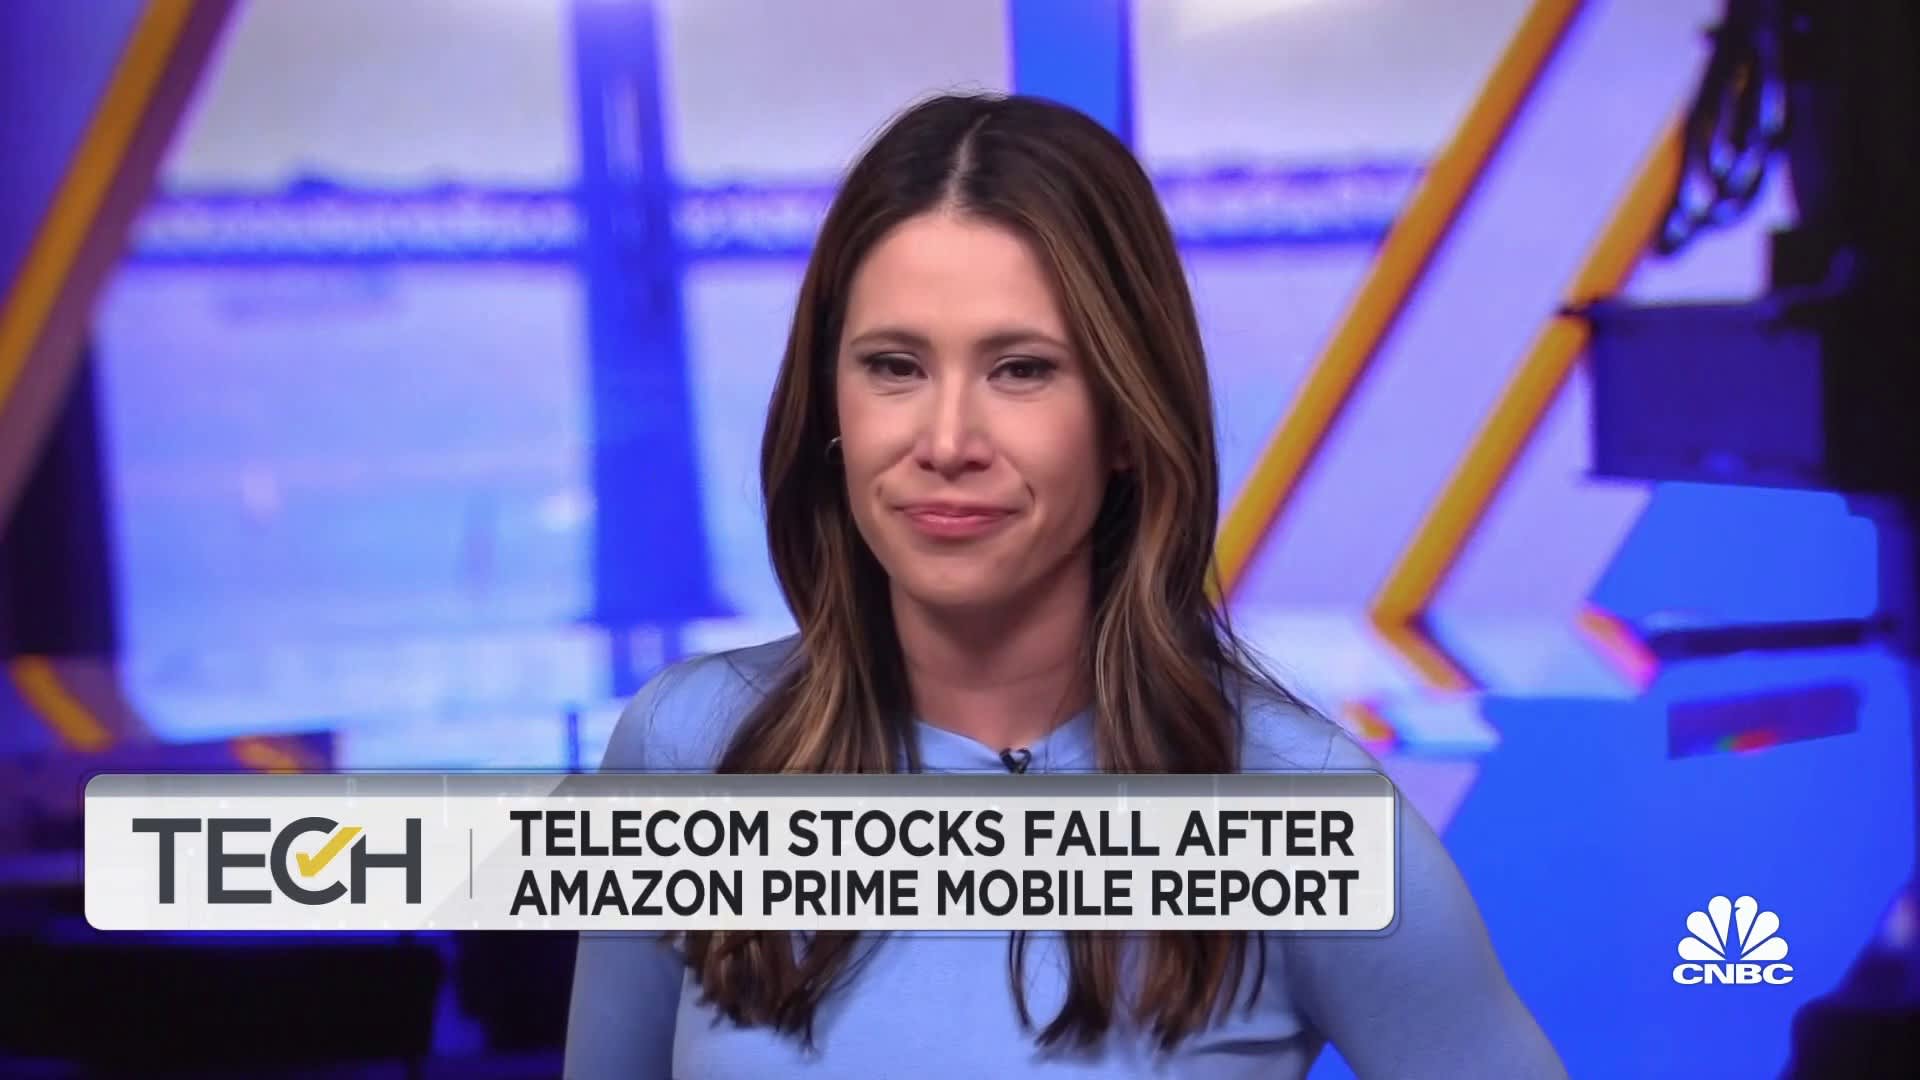 Telecom stocks fall after Amazon Prime mobile report